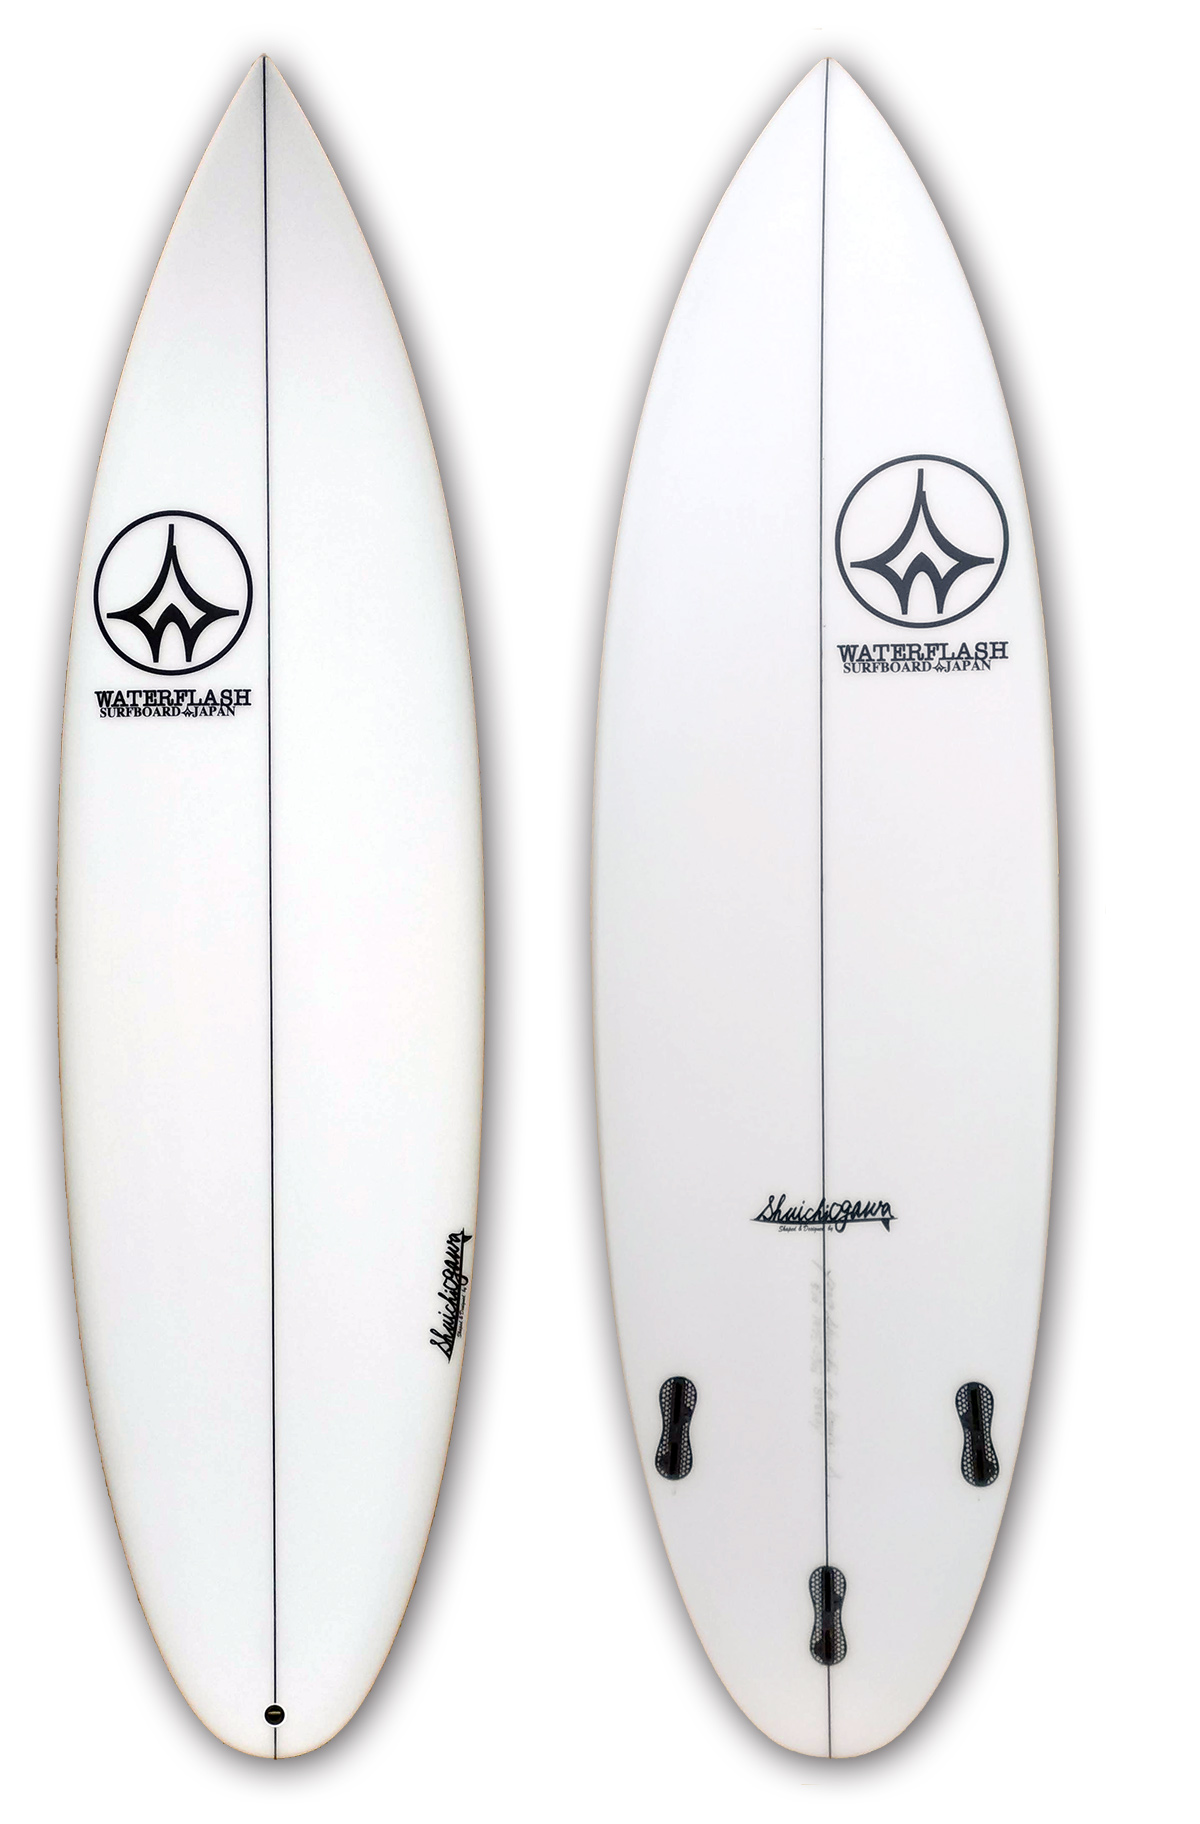 2019 – Water Flash Surfboard